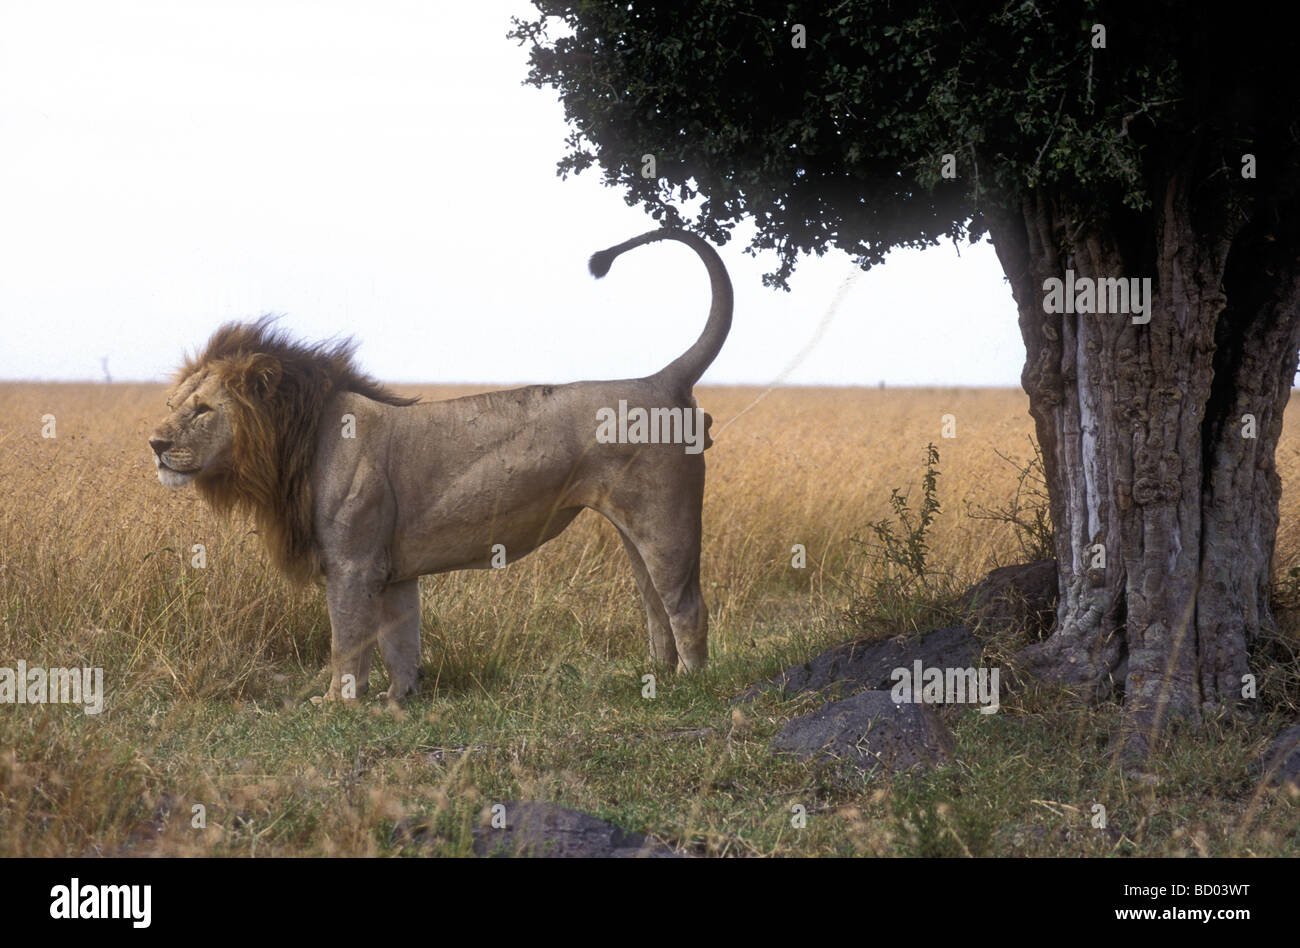 Territorial behaviour Male lion marking territory spraying urine against tree Masai Mara National Reserve Kenya East Africa Stock Photo